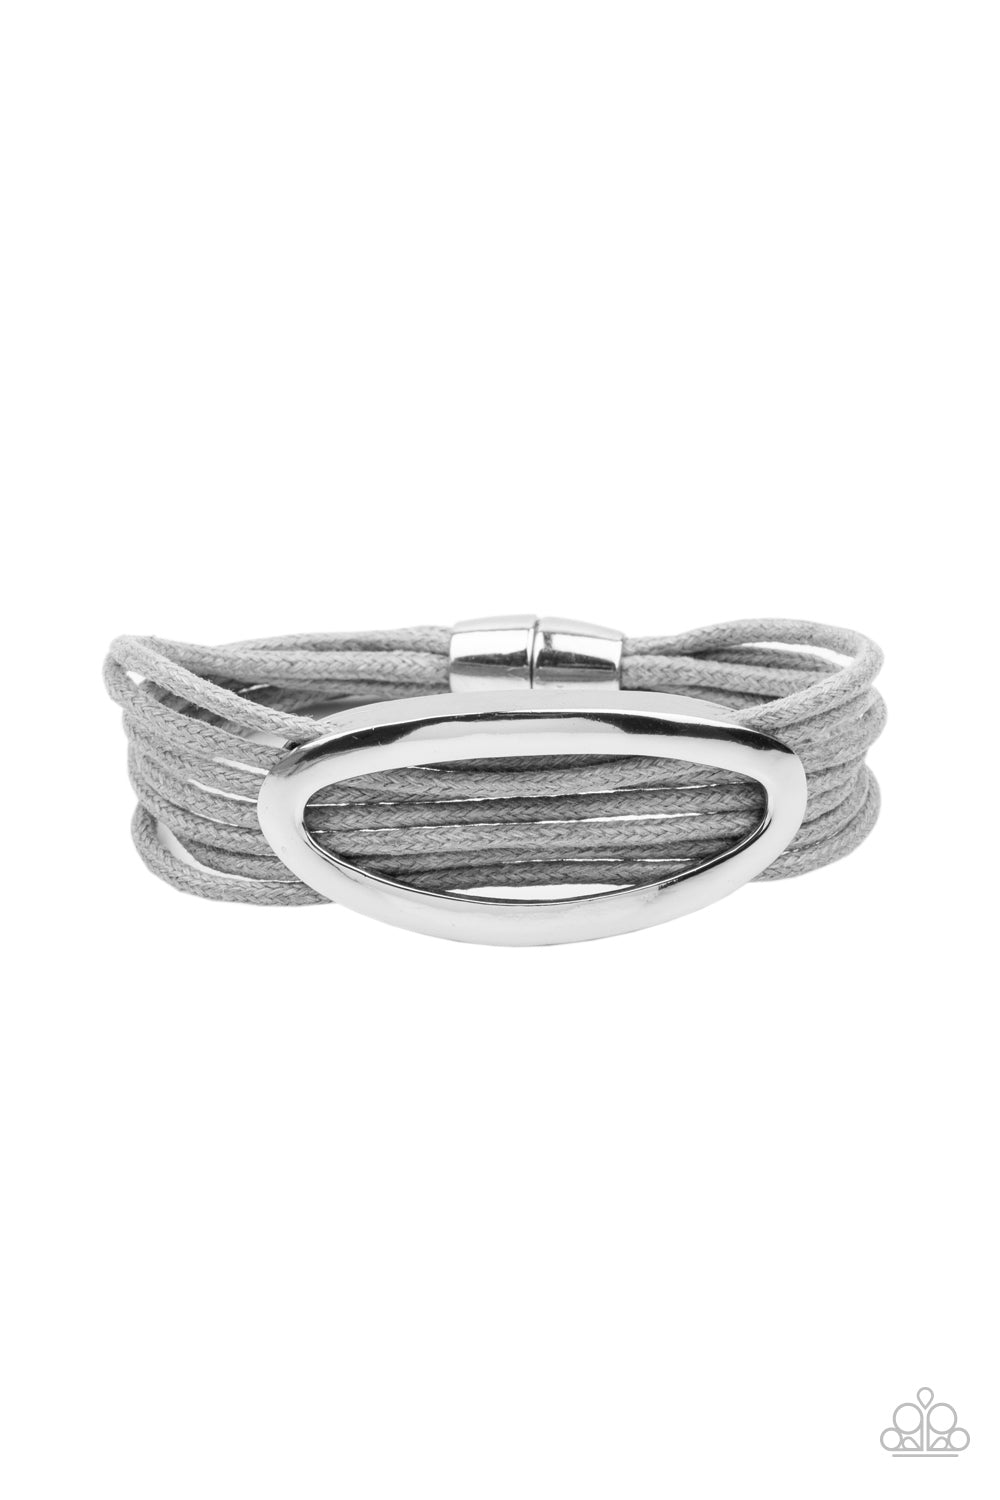 corded-couture-silver-p9se-svxx-096xx